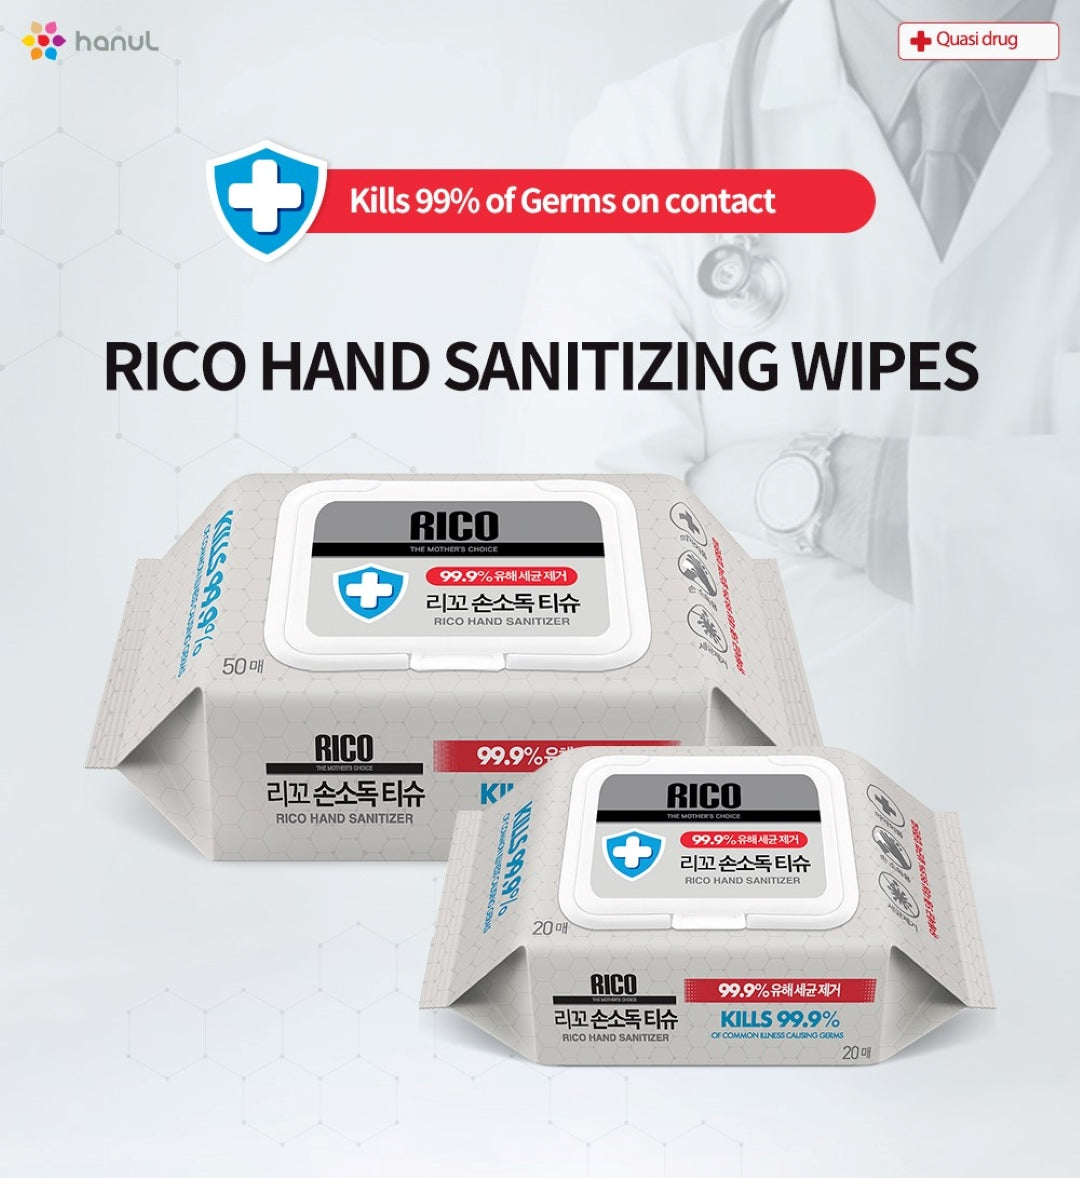 RICO Hand Sanitizing Wipes Introduction